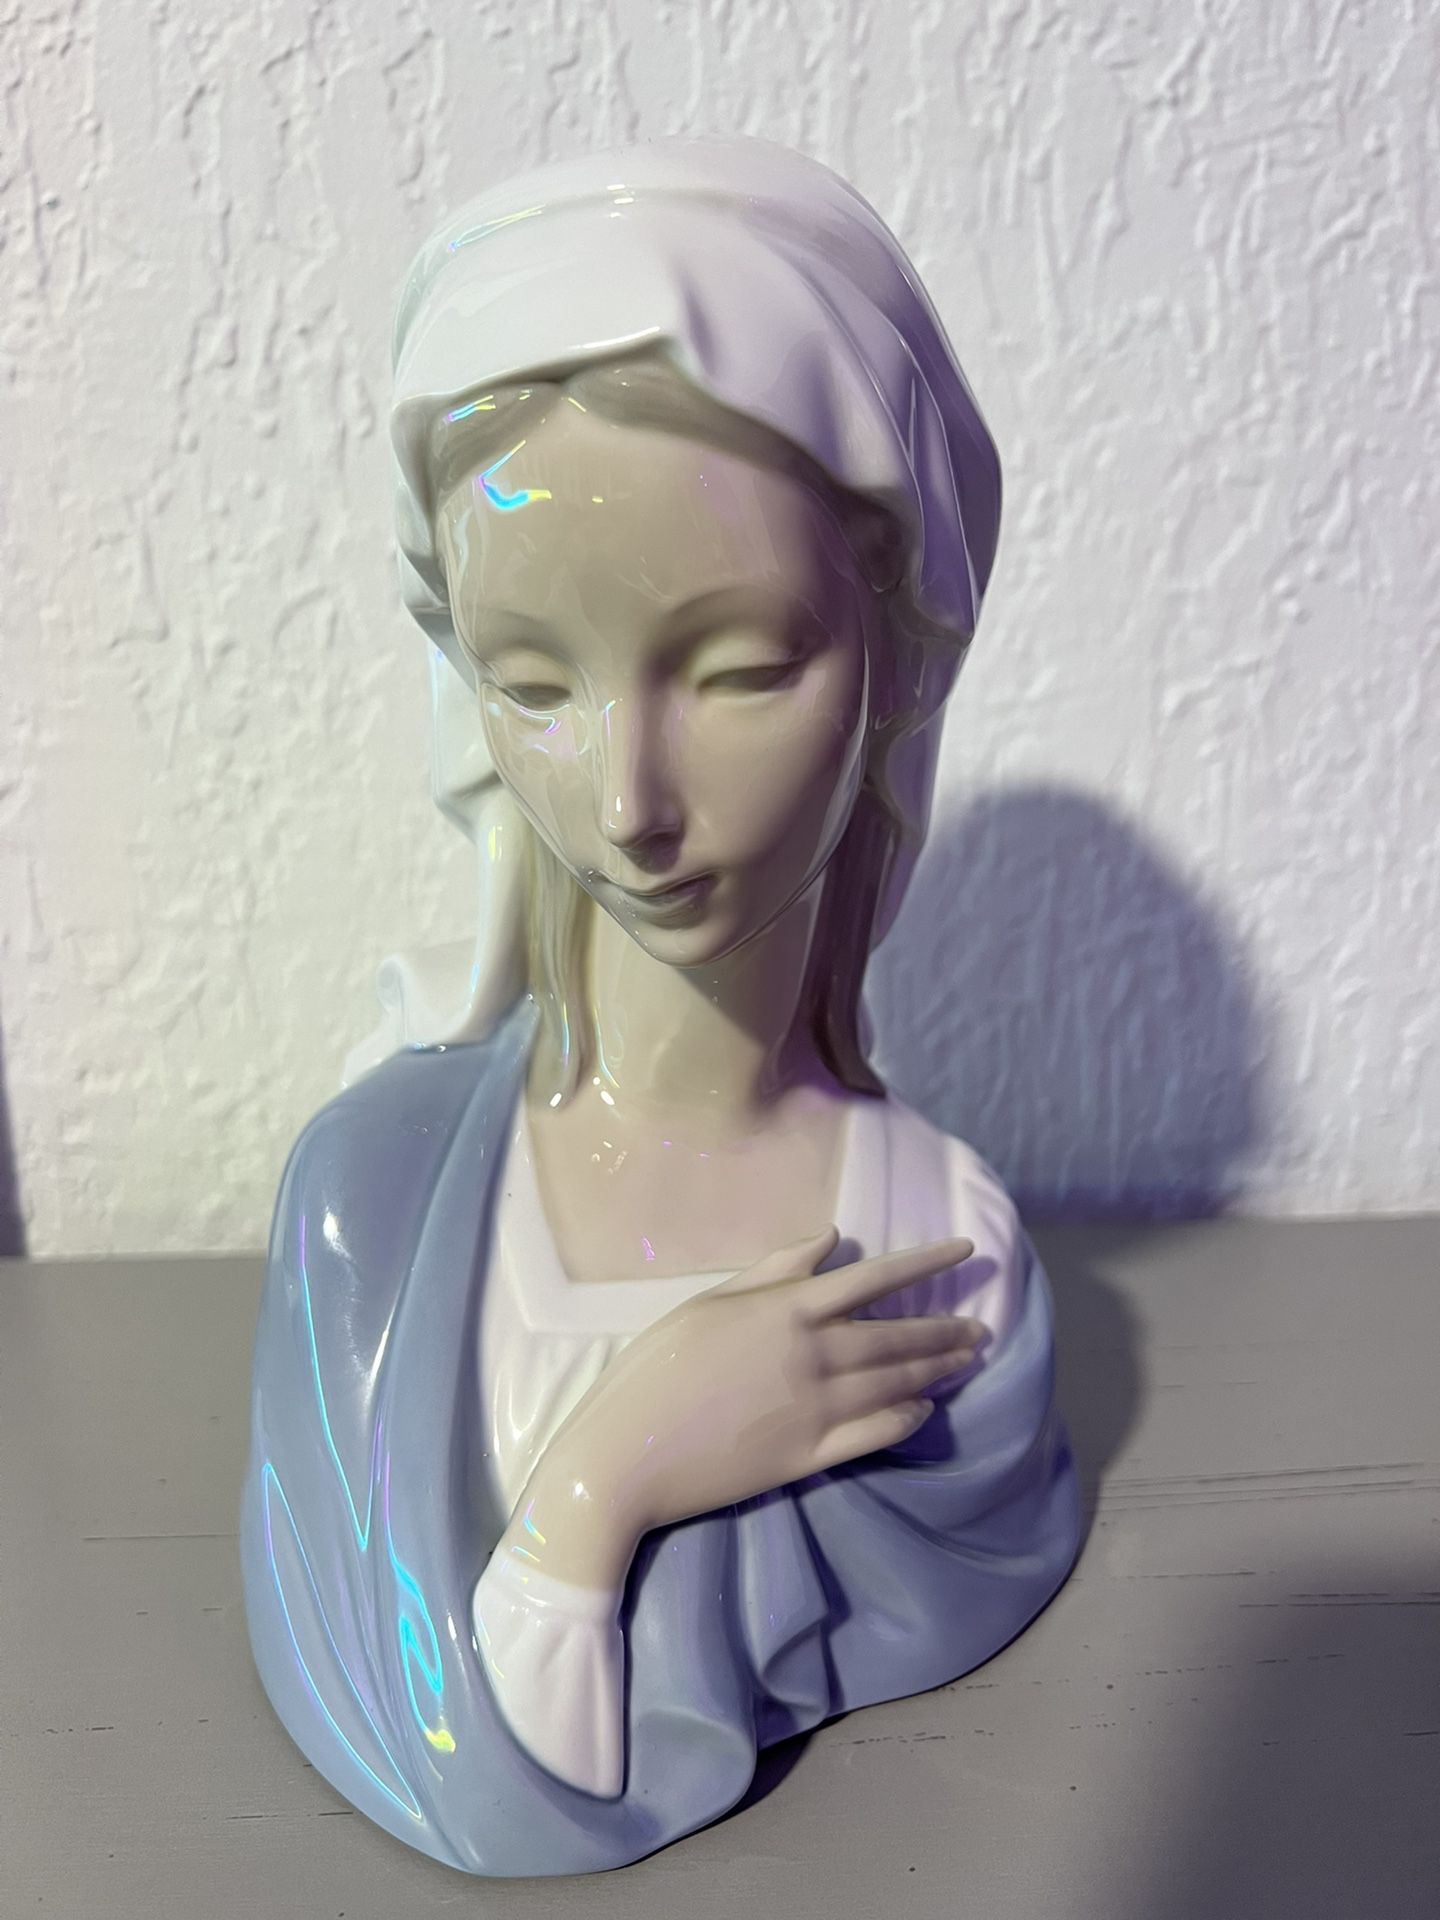 Vintage Lladro Porcelain Figurine "MADONNA HEAD" Virgin Mary bust #4649 Retired